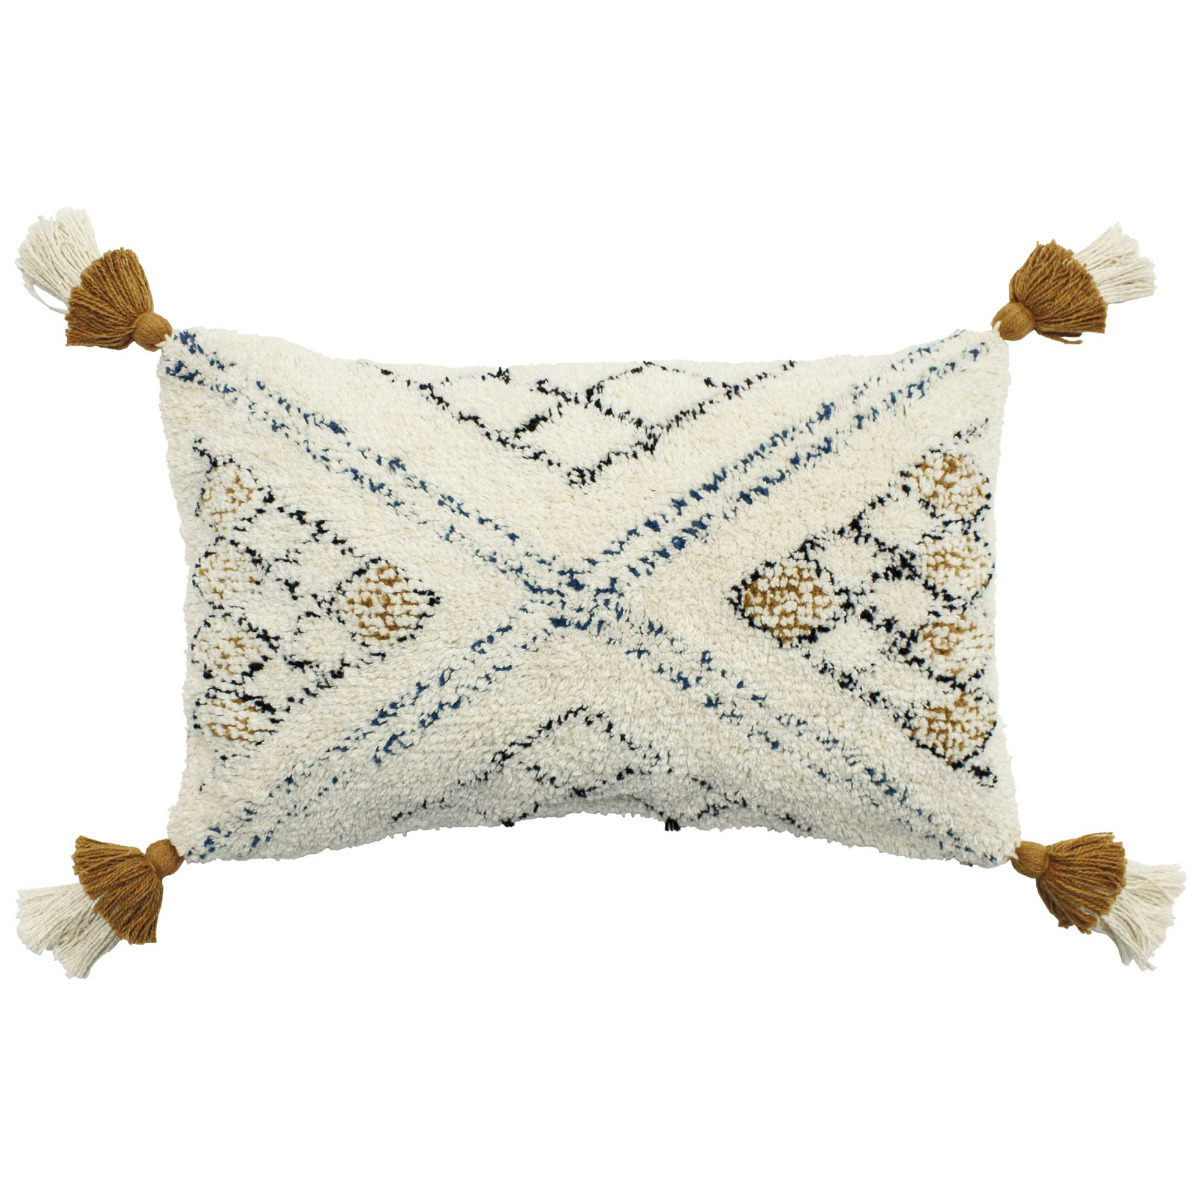 Tufted Ochre Cushion, Square, White Fabric - Barker & Stonehouse - image 1